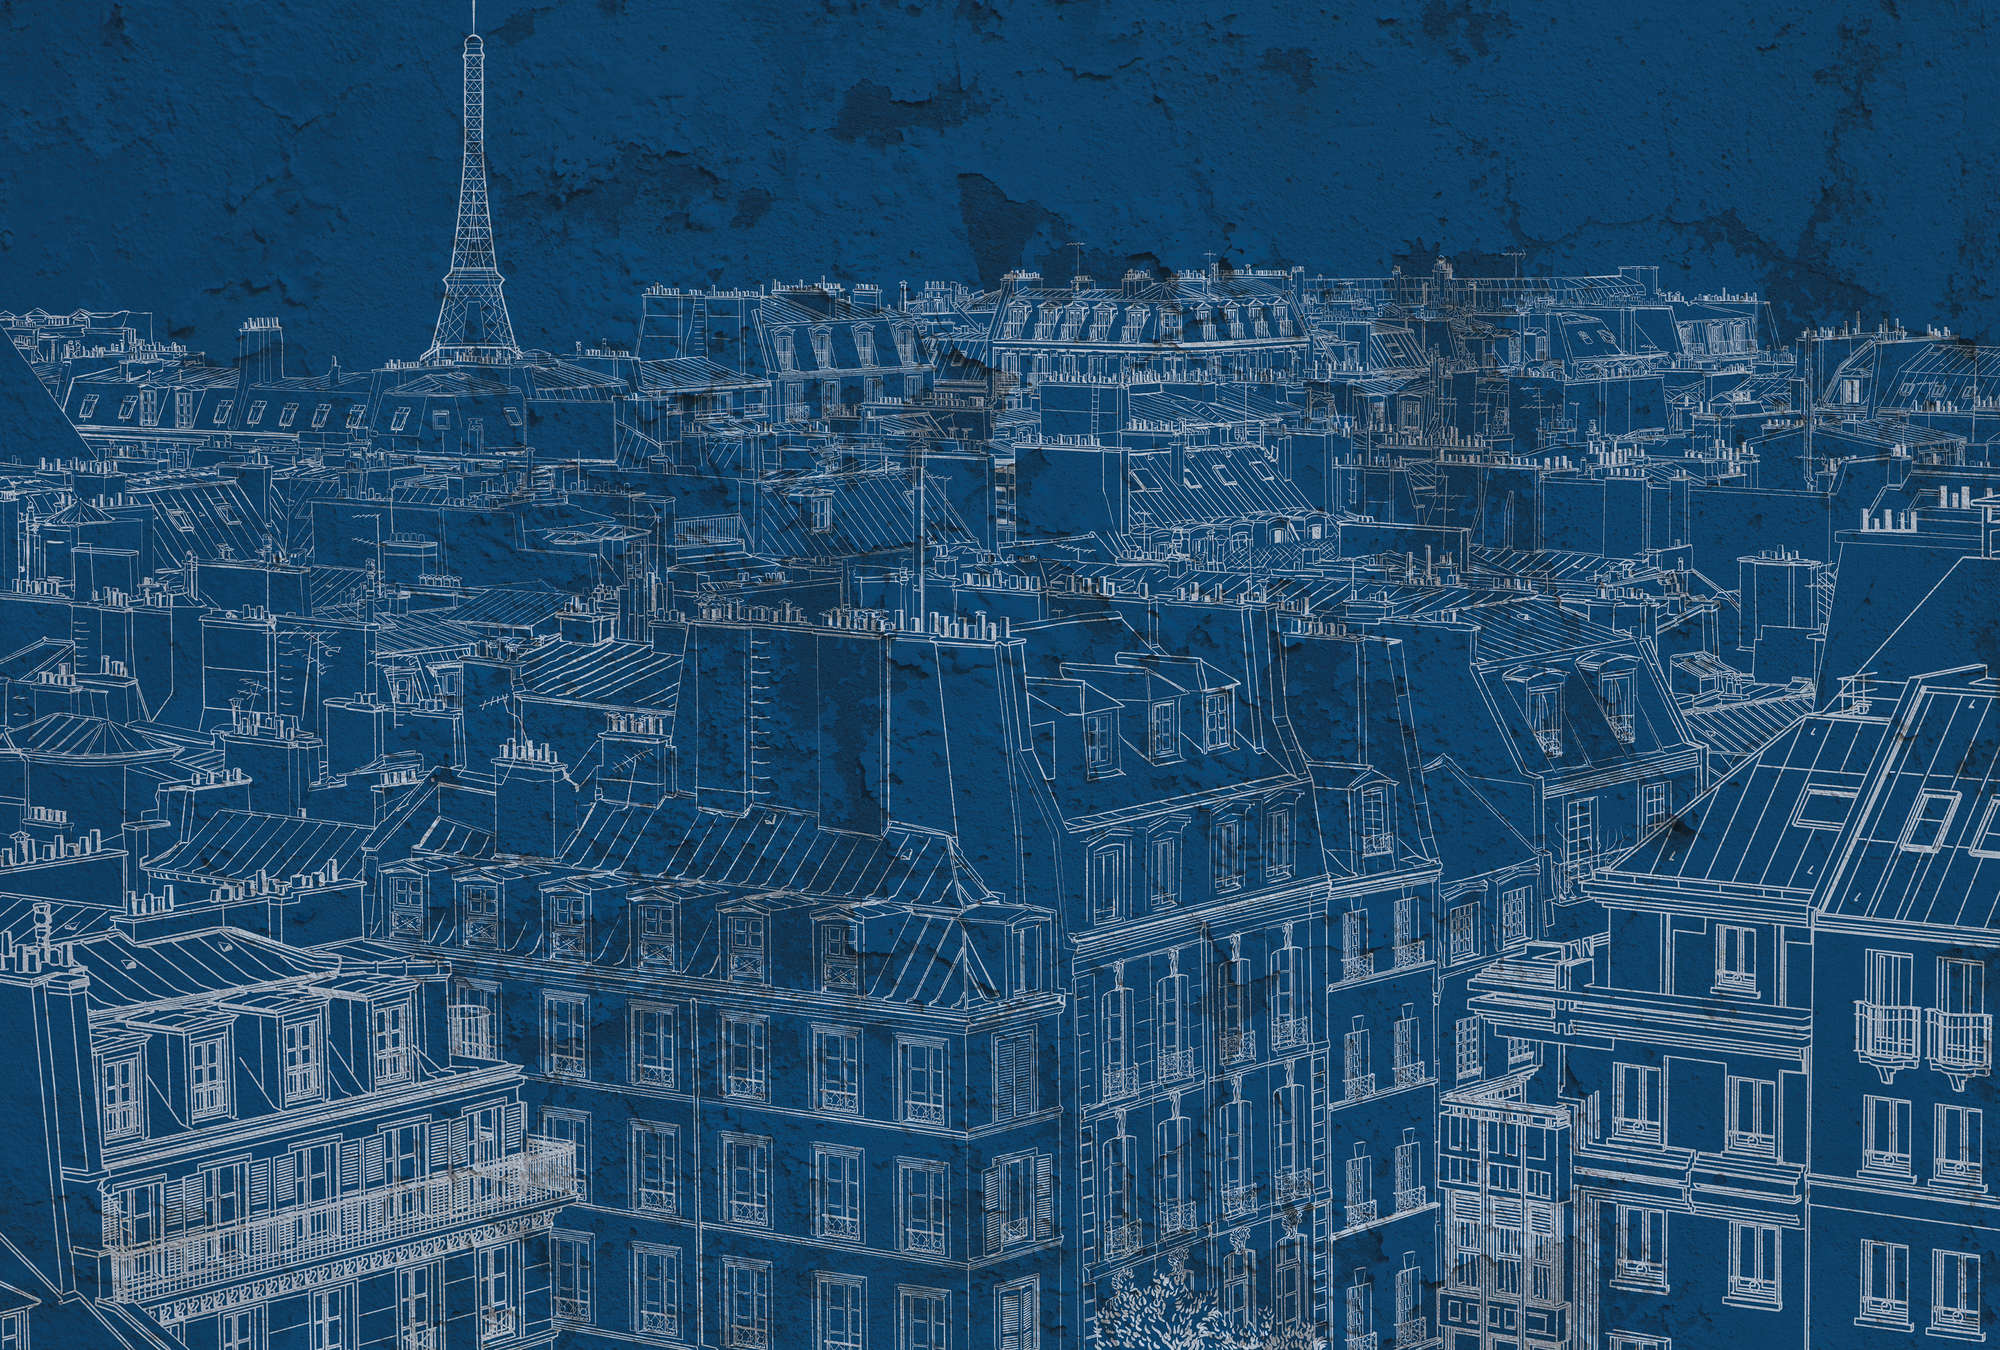             Photo wallpaper Paris Blueprint design & skyline - Blue, White
        